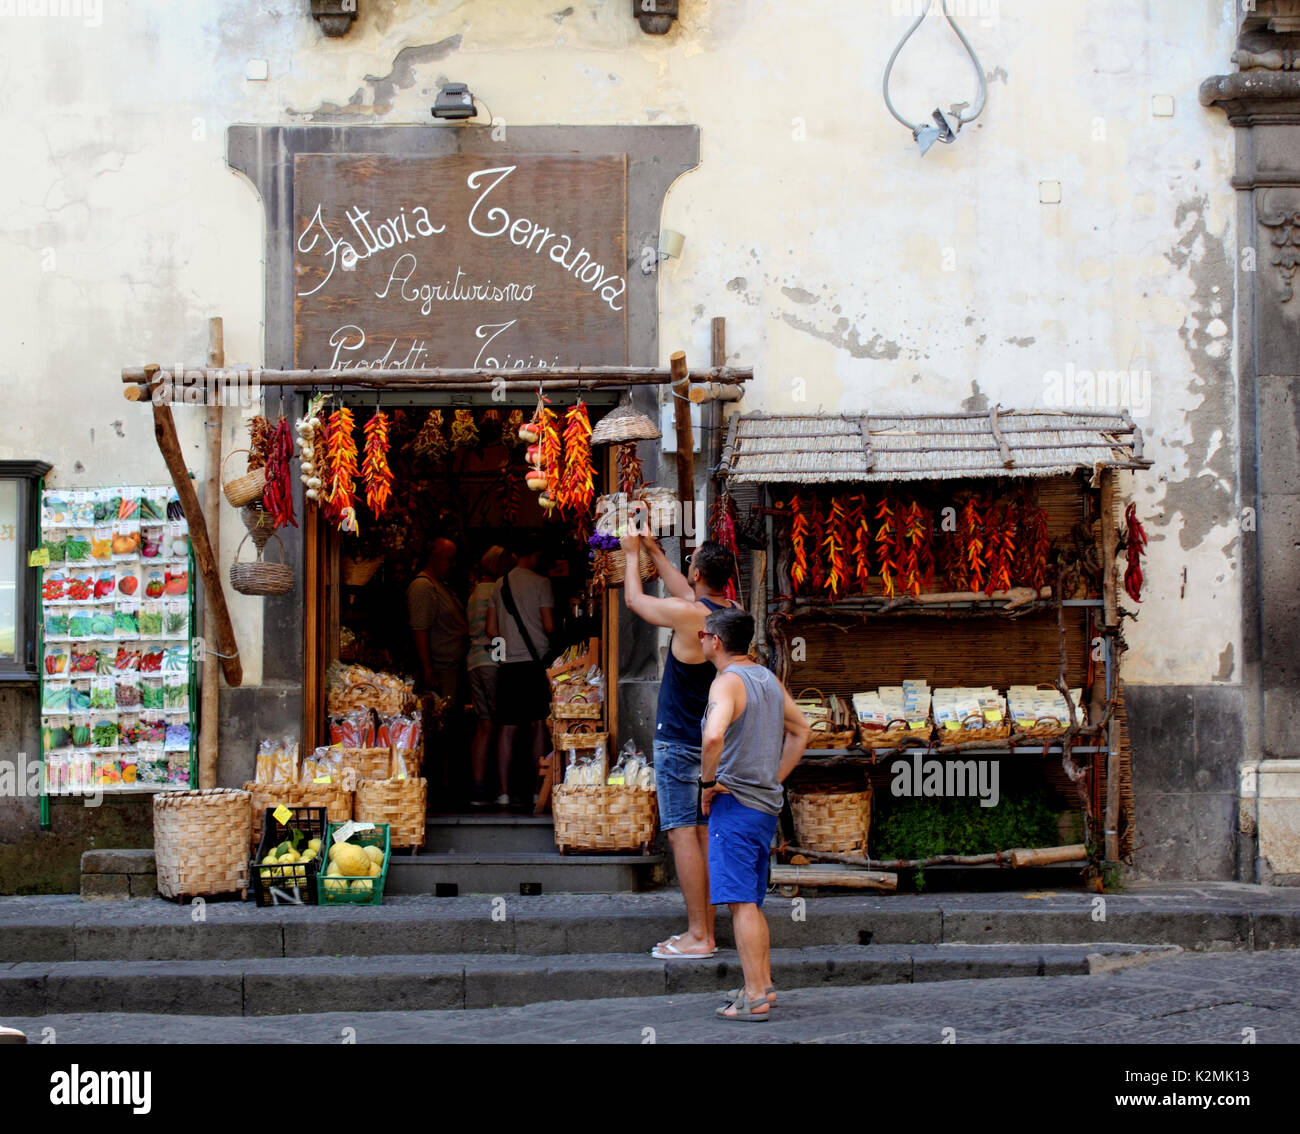 Landscape view of tourist photographing street scene Sorrento Amalfi Coast Italy Stock Photo